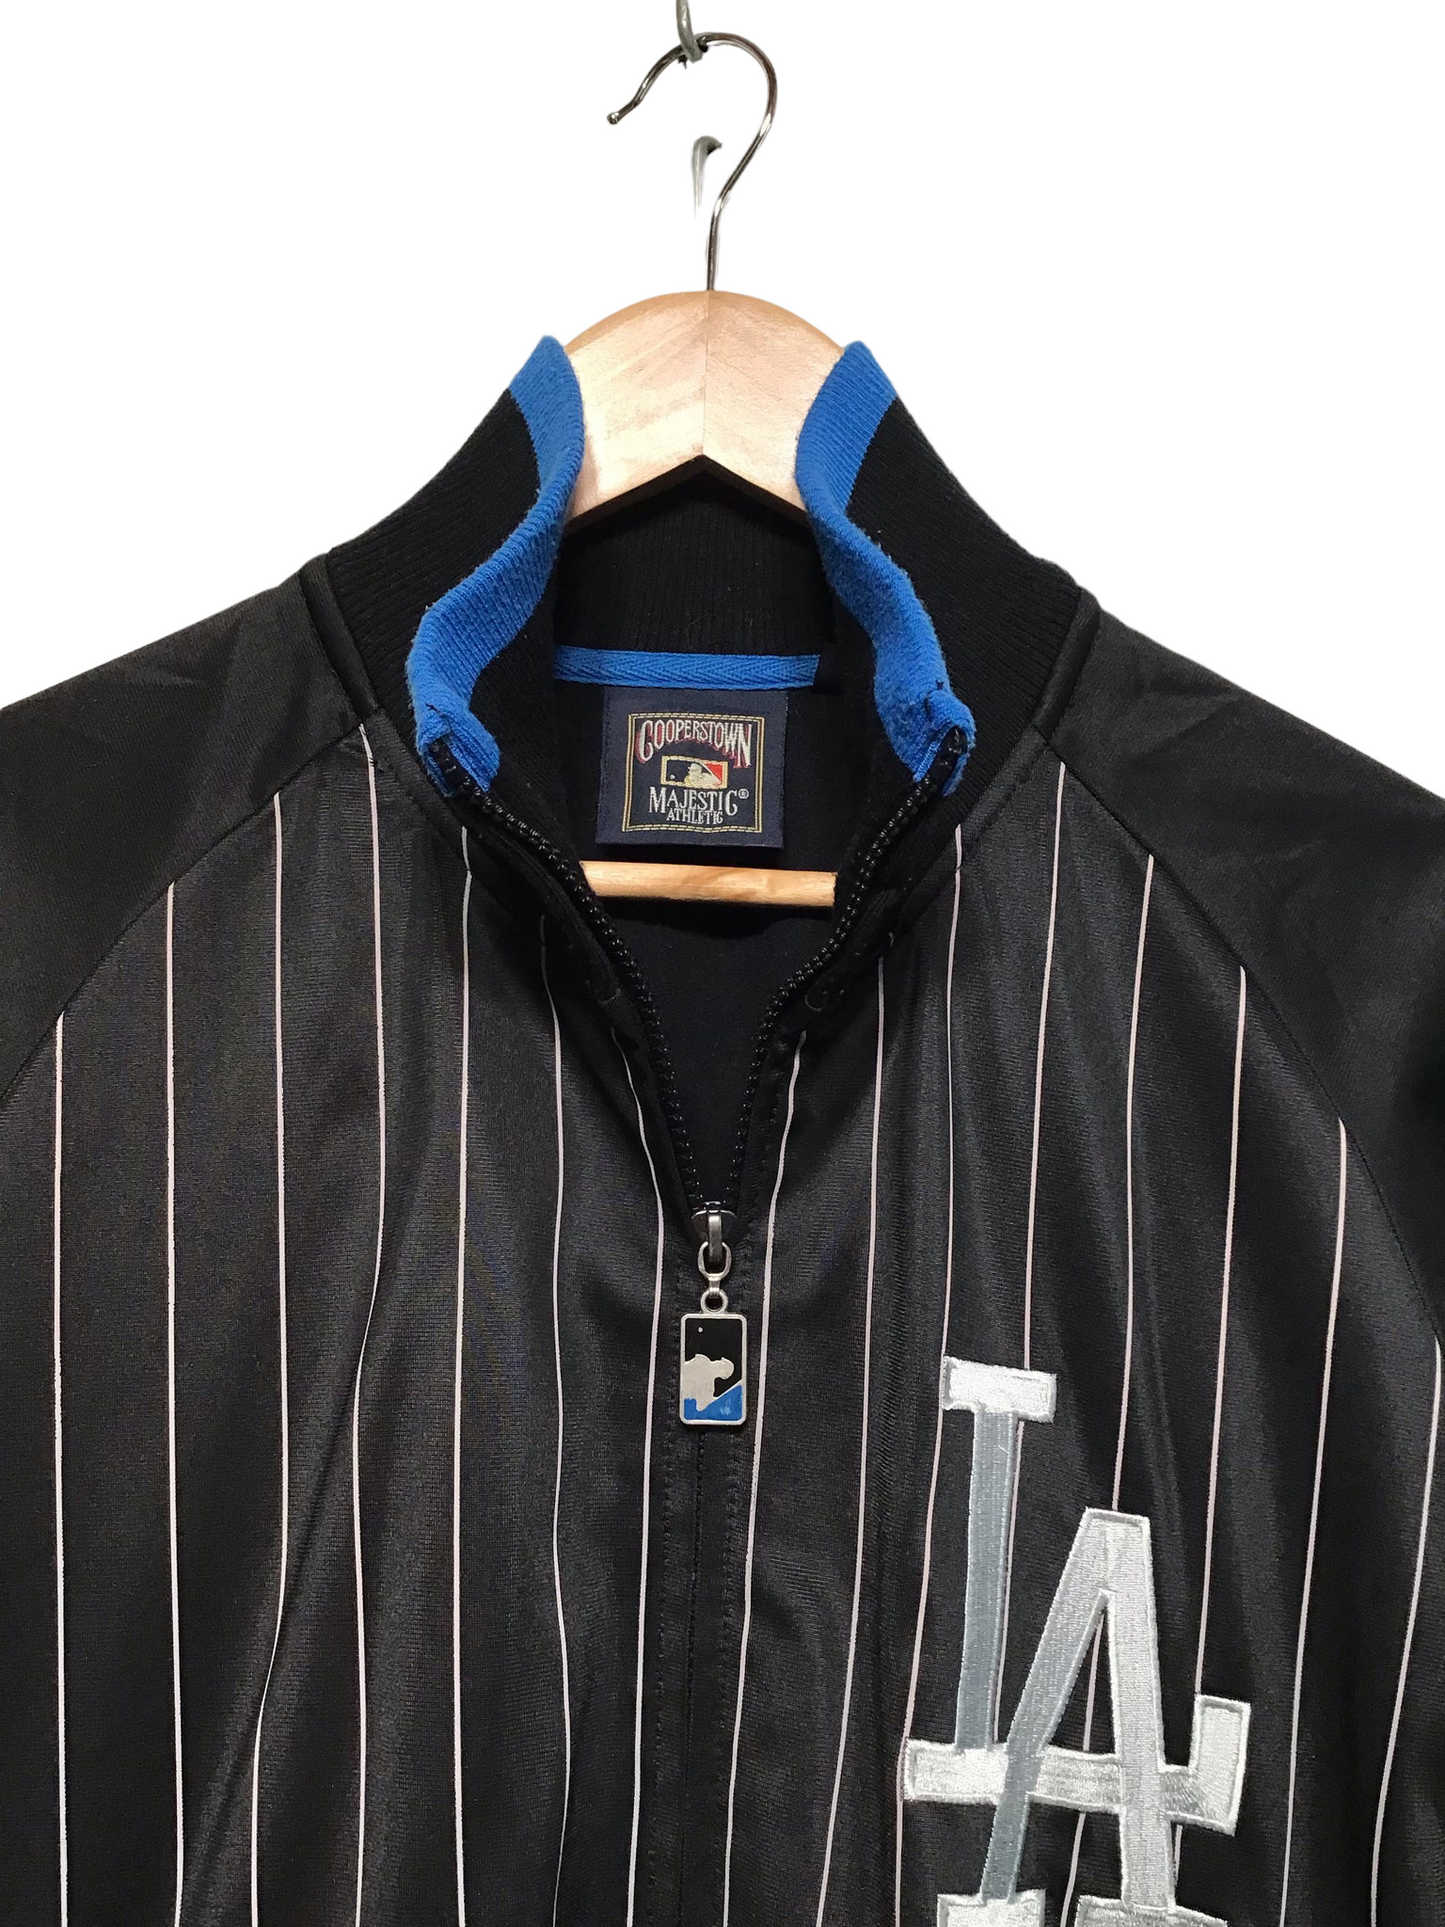 MLB LA Dodgers Jacket (Size M)